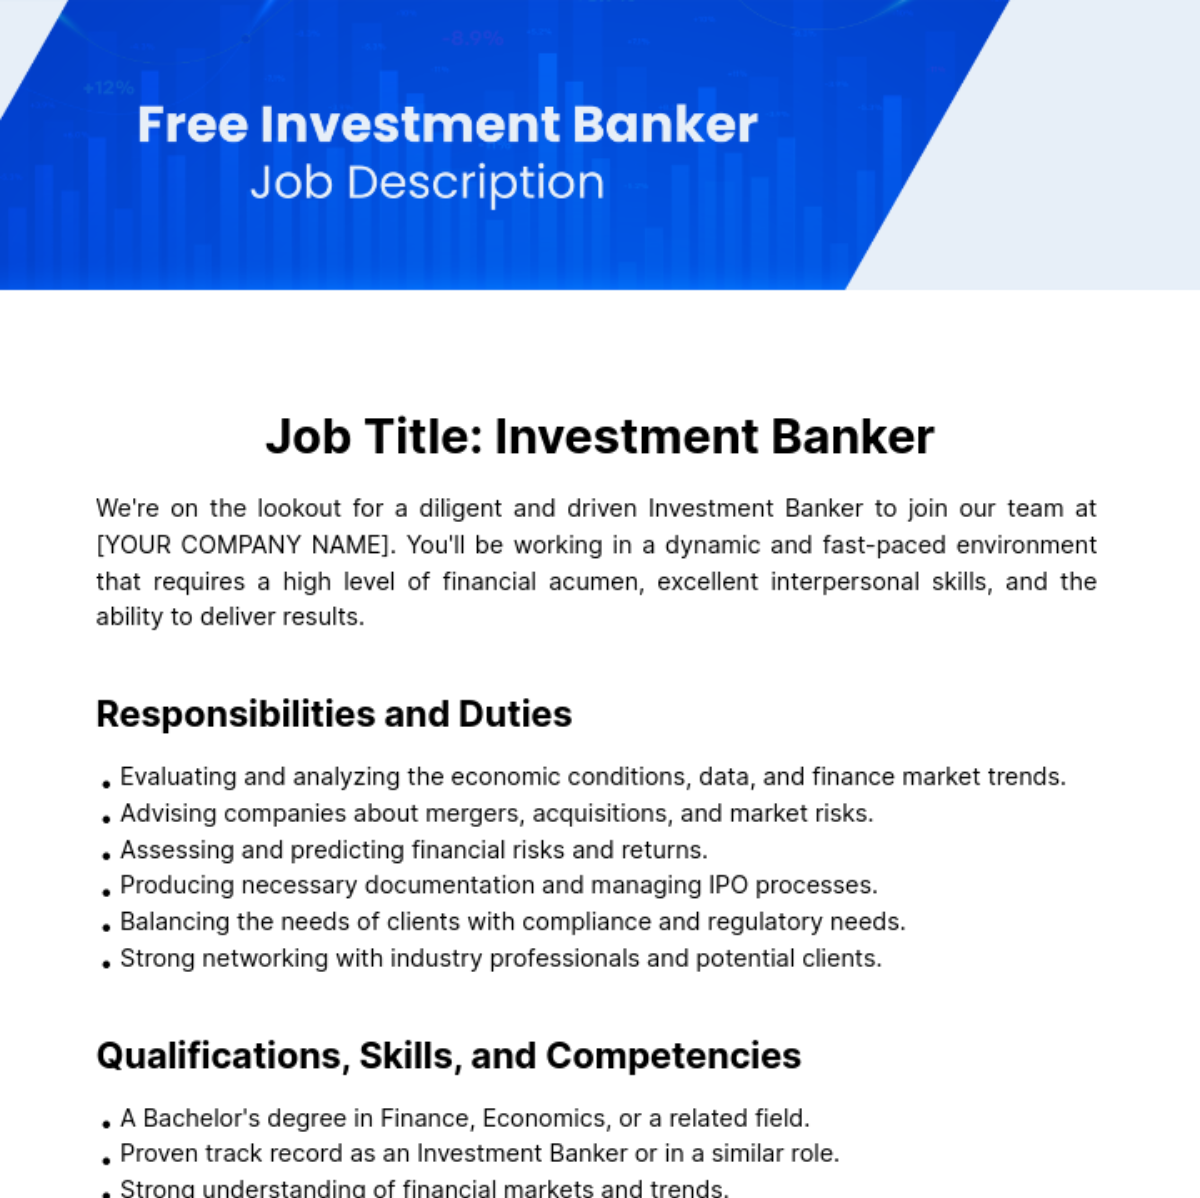 Free Investment Banker Job Description Template